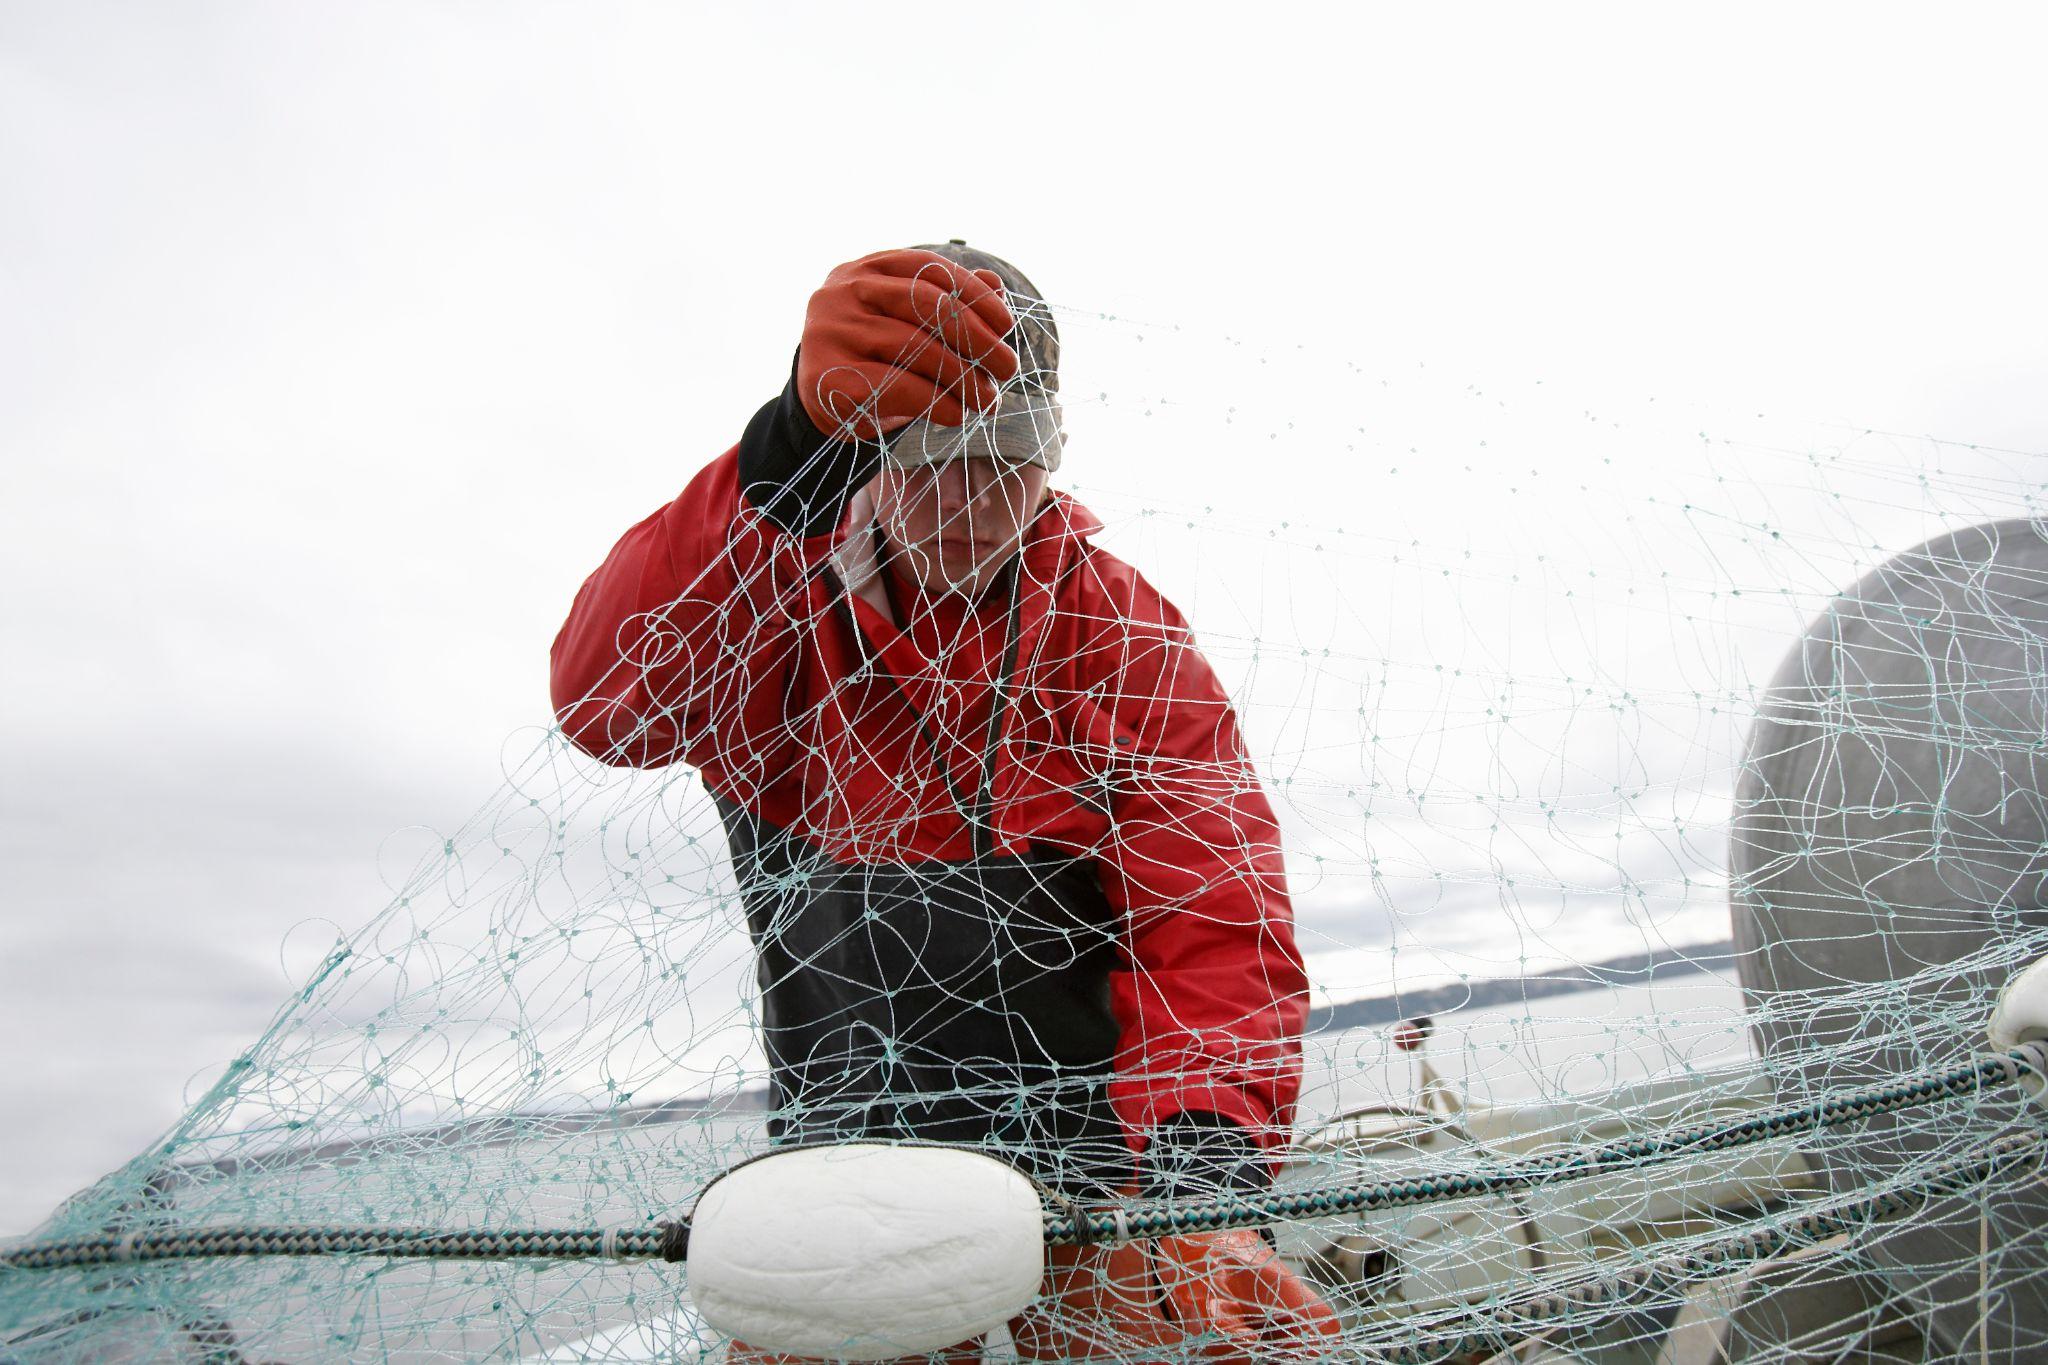 Fisherman untangling nets at sea